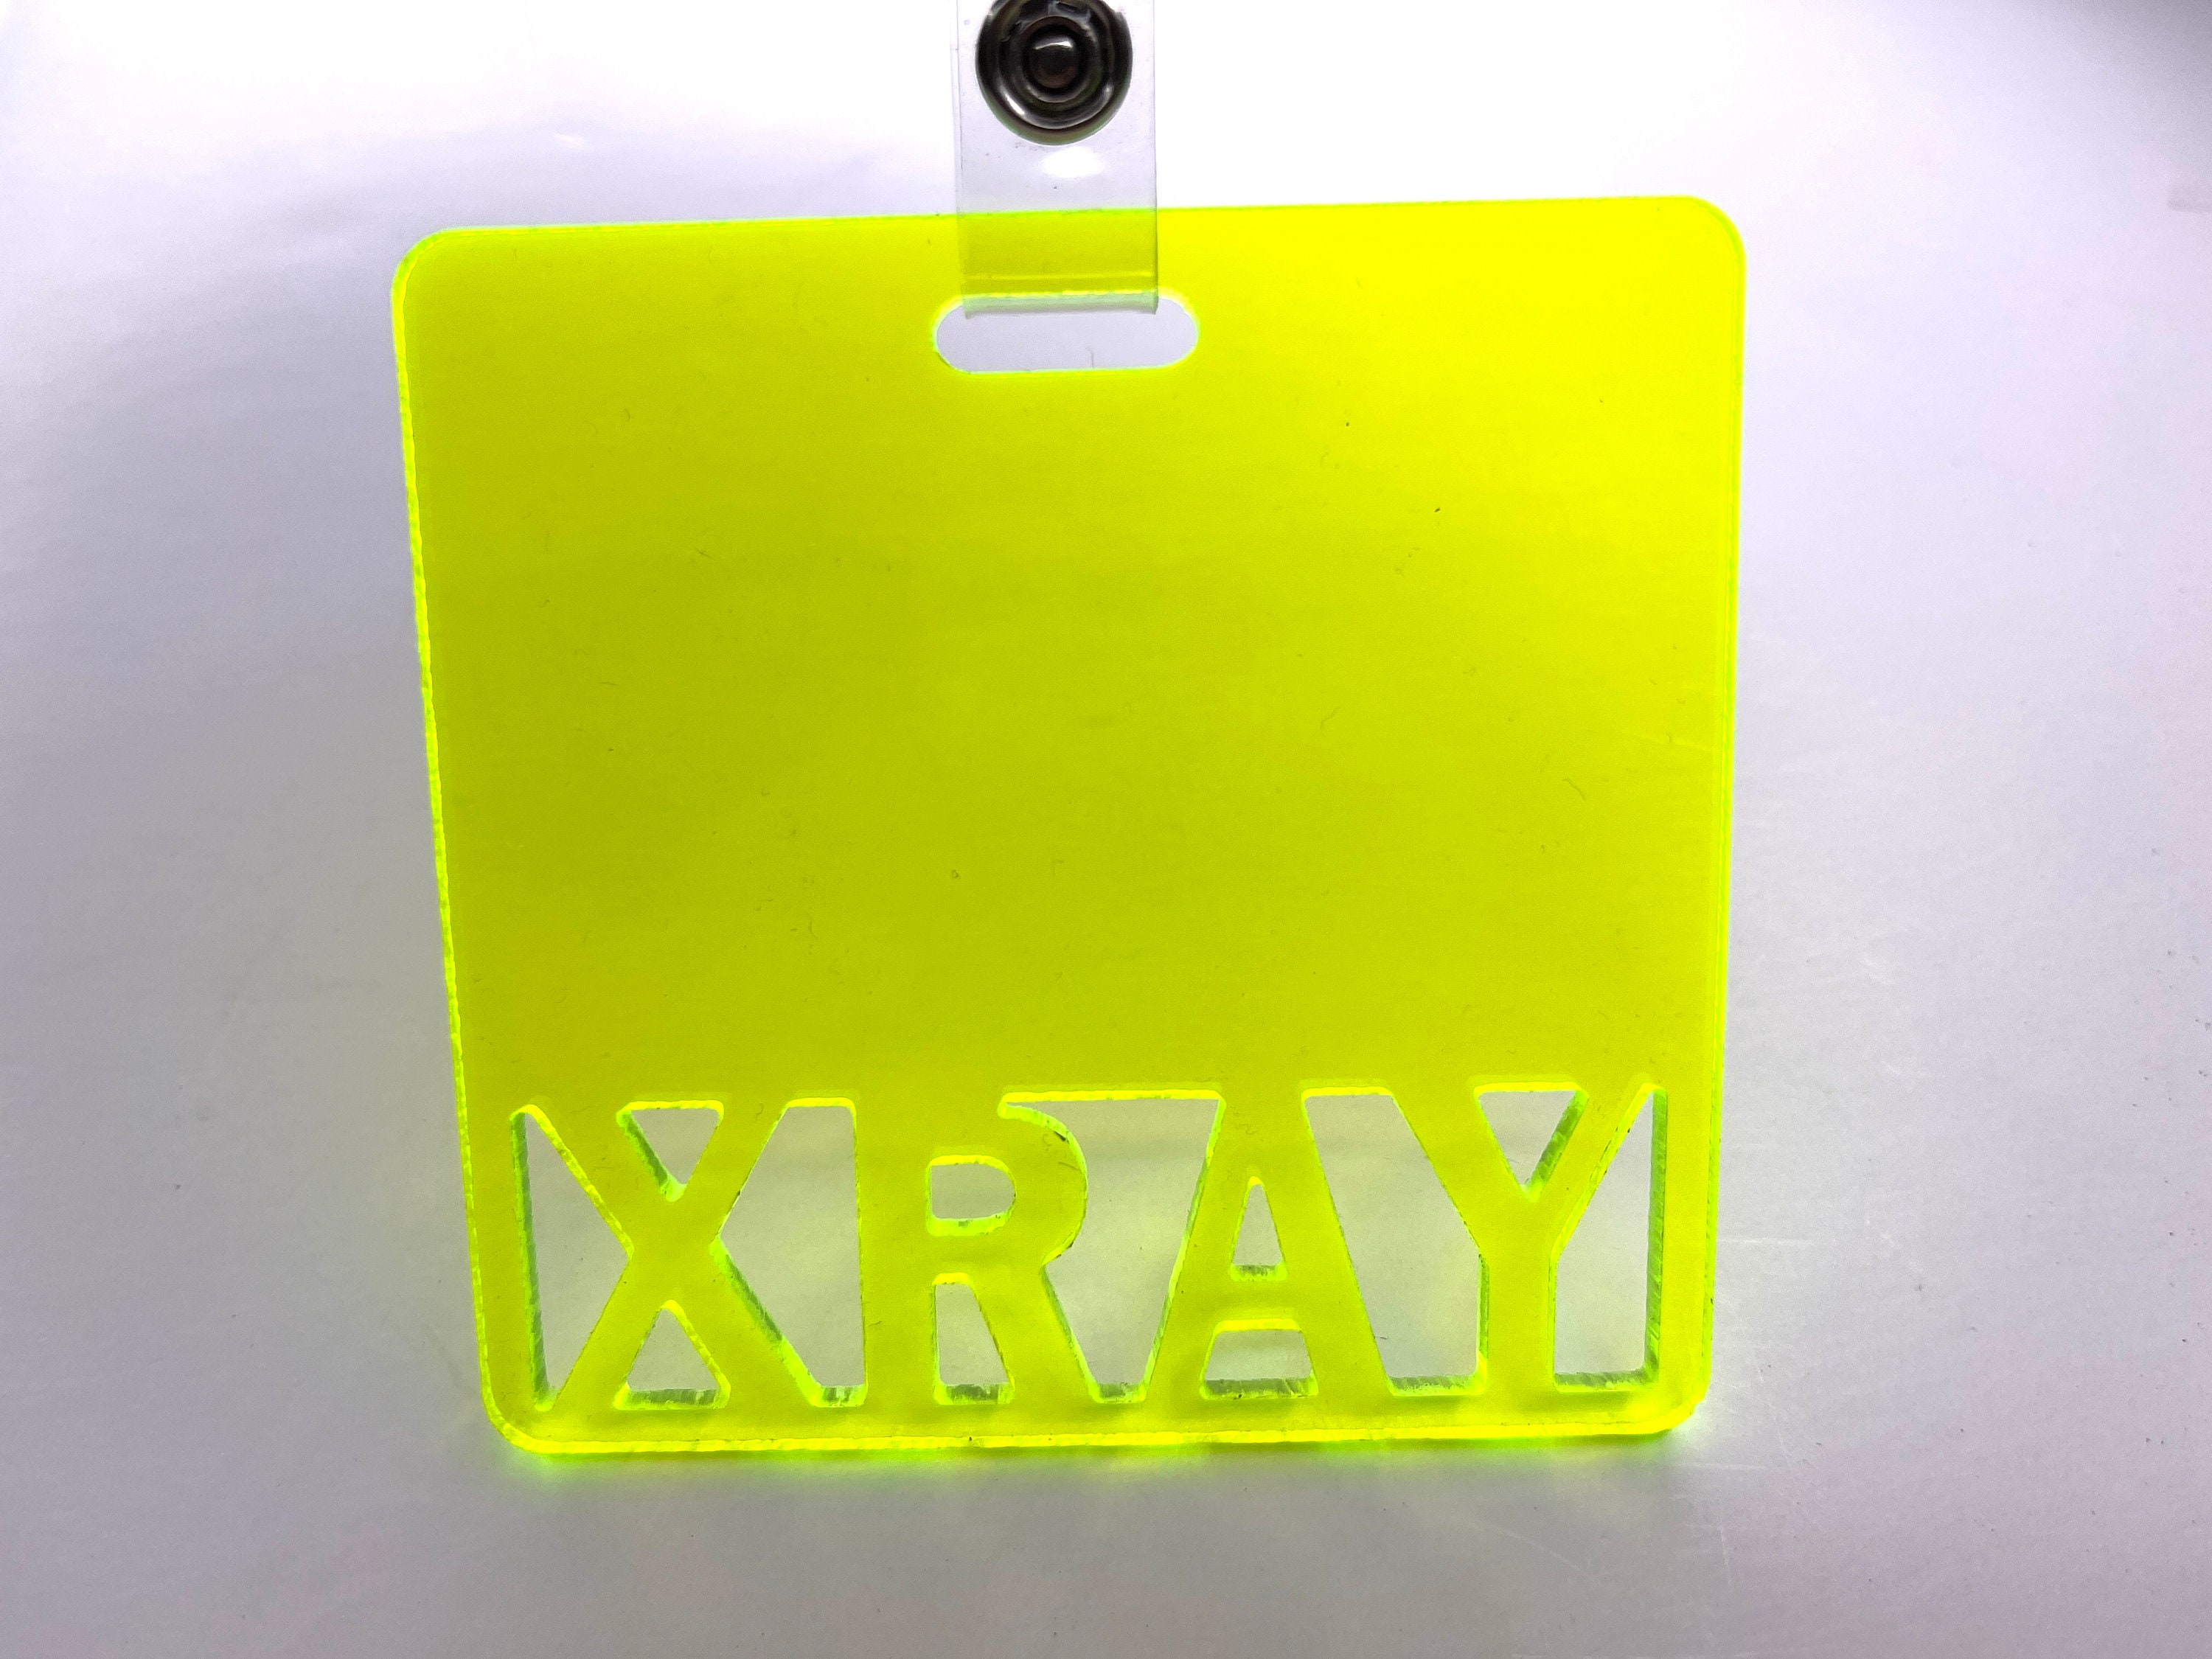 Acrylic Glitter Marker Parker - Xray Marker Holder - Acrylic Badge - Radiology Marker Parker - Xray Holder - Xray Marker Badge - Badge Buddy